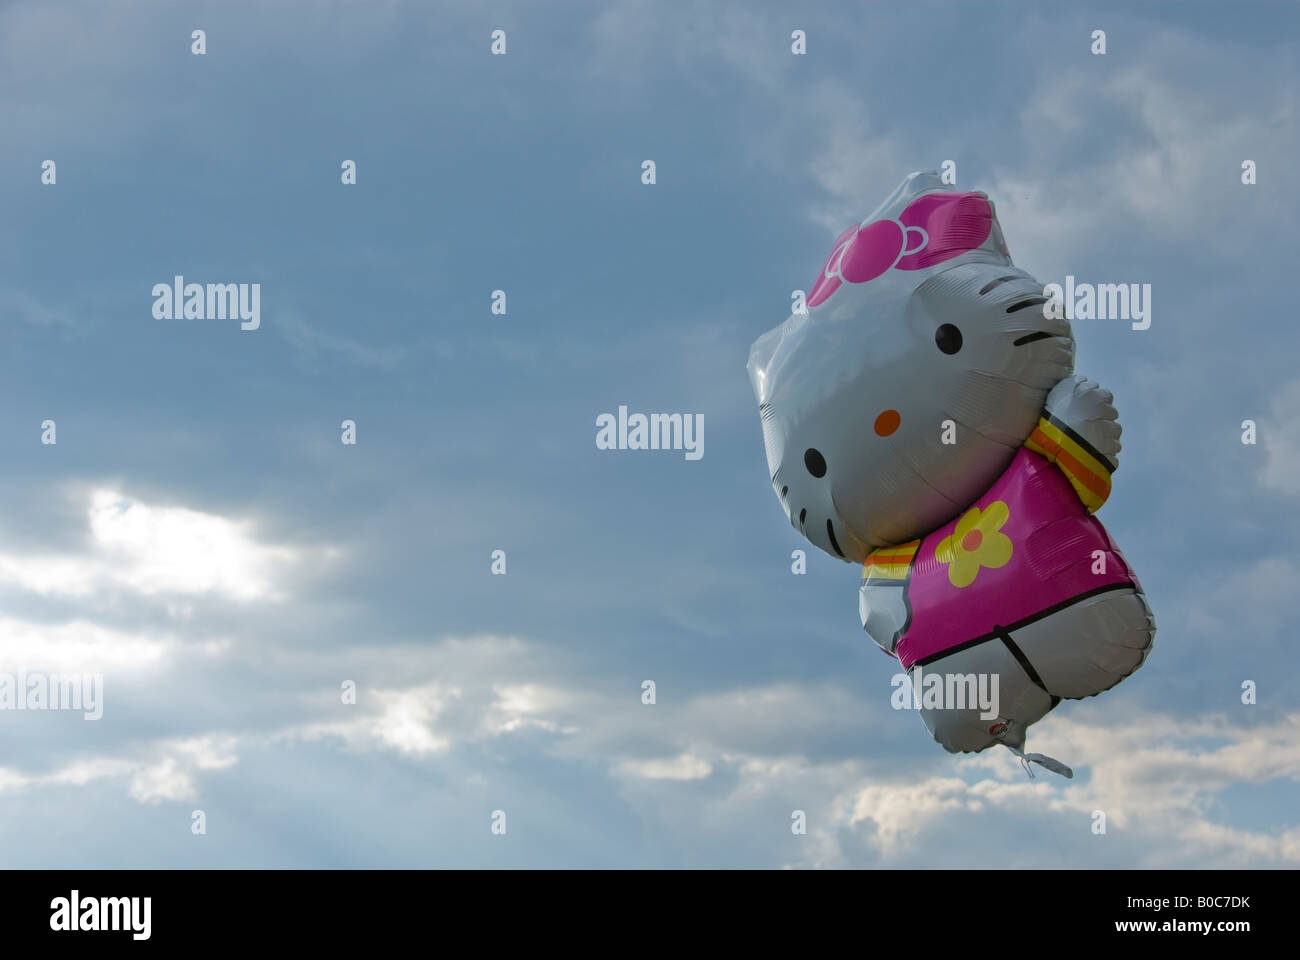 A hello kitty helium balloon against cloudy sky Stock Photo